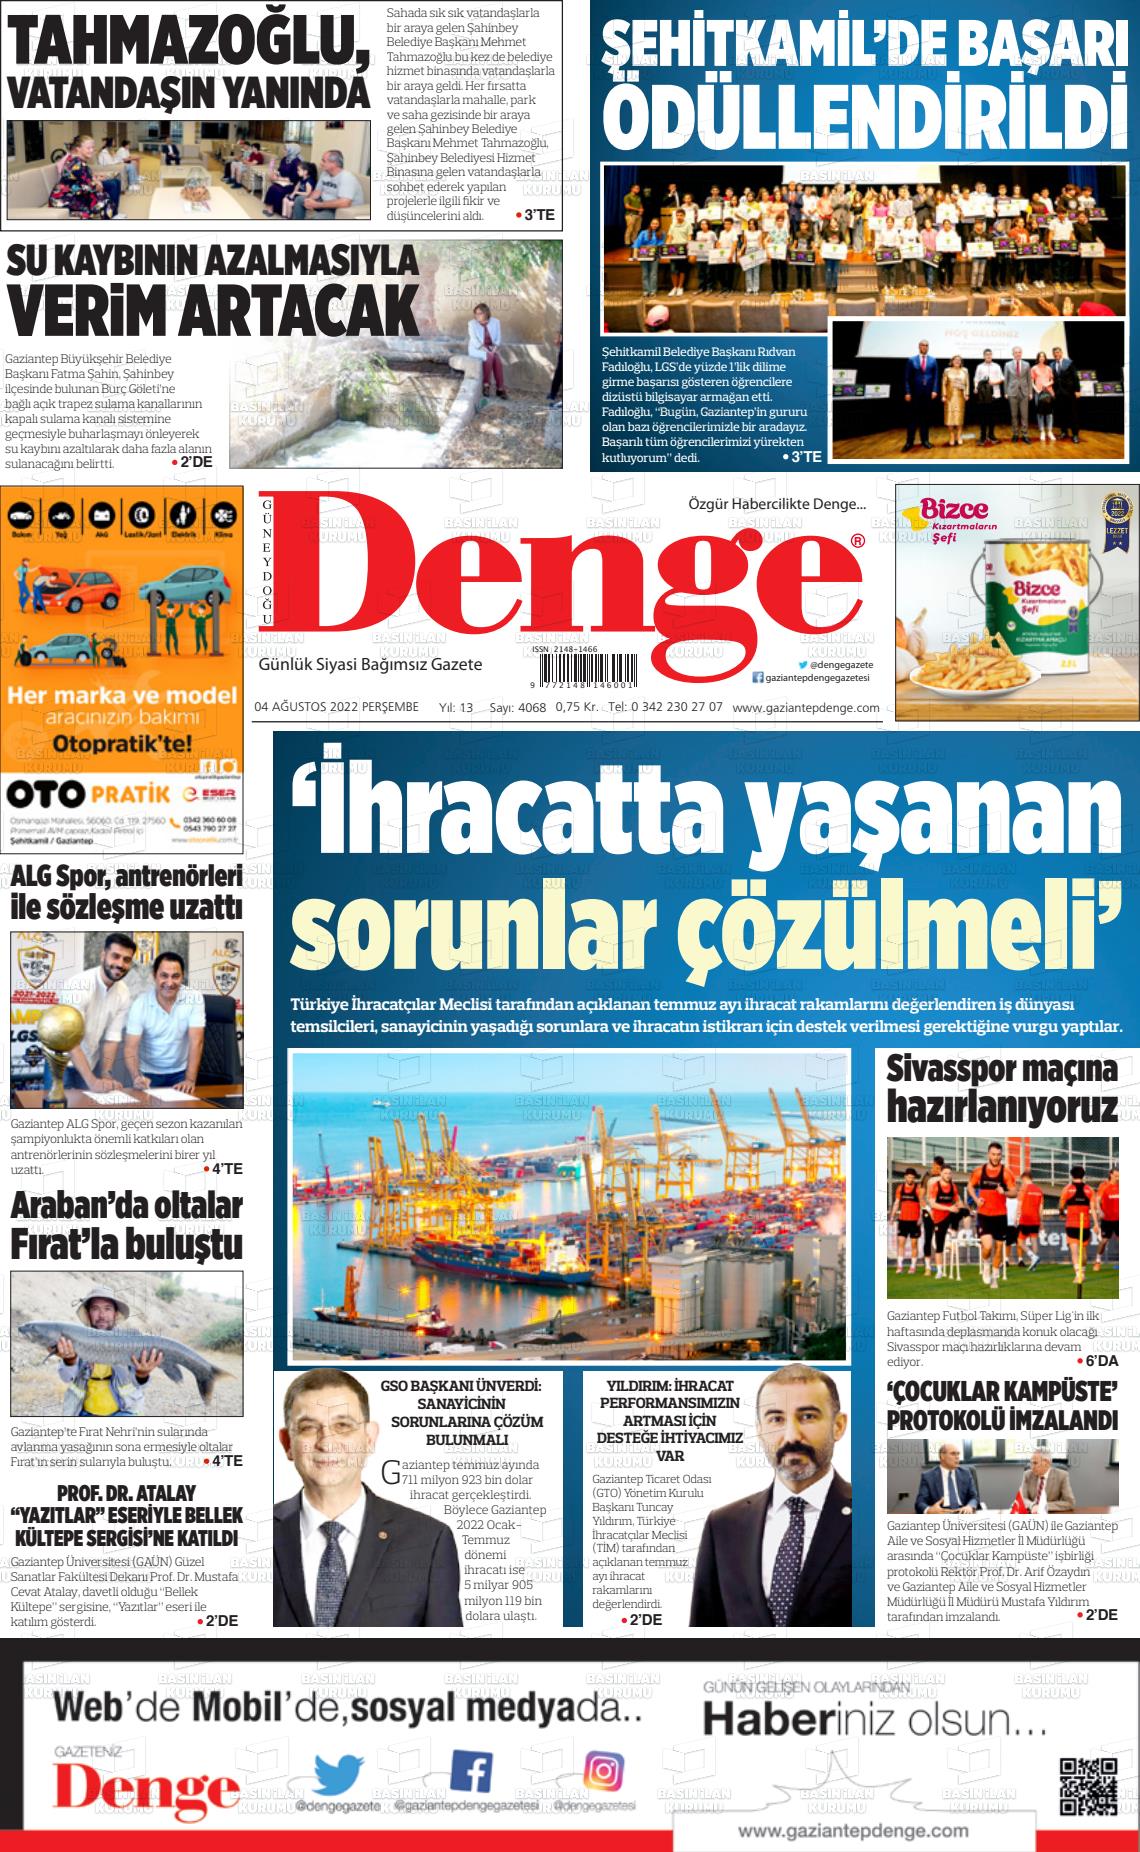 04 Ağustos 2022 Gaziantep Denge Gazete Manşeti